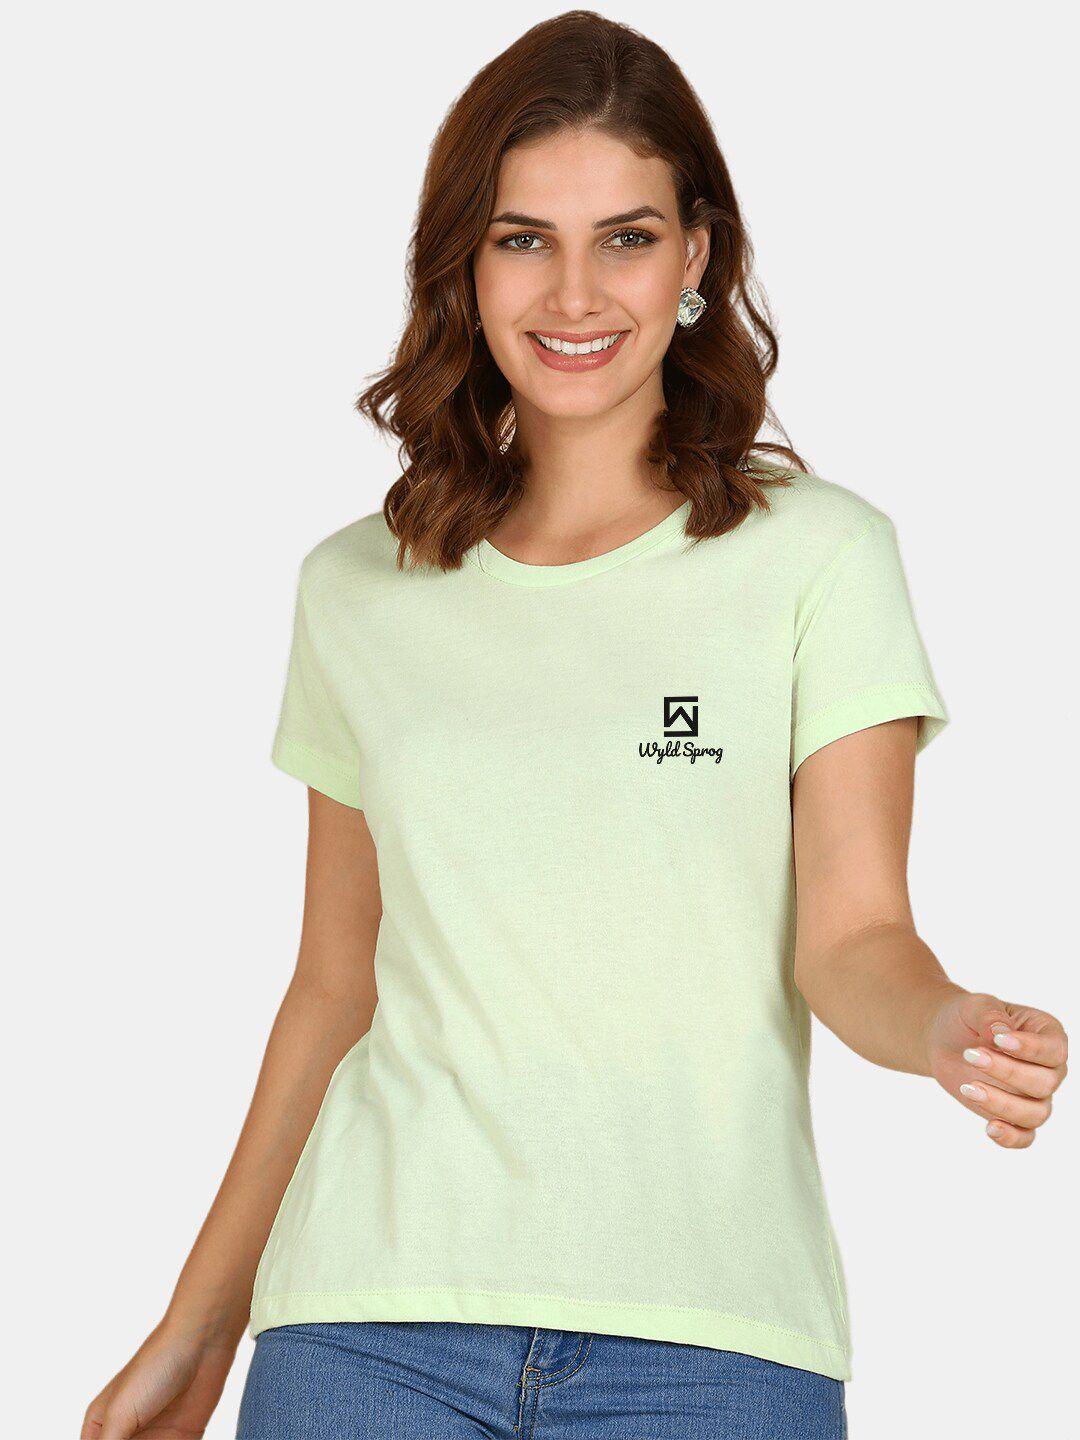 wyld sprog brand logo pure cotton regular fit t-shirt